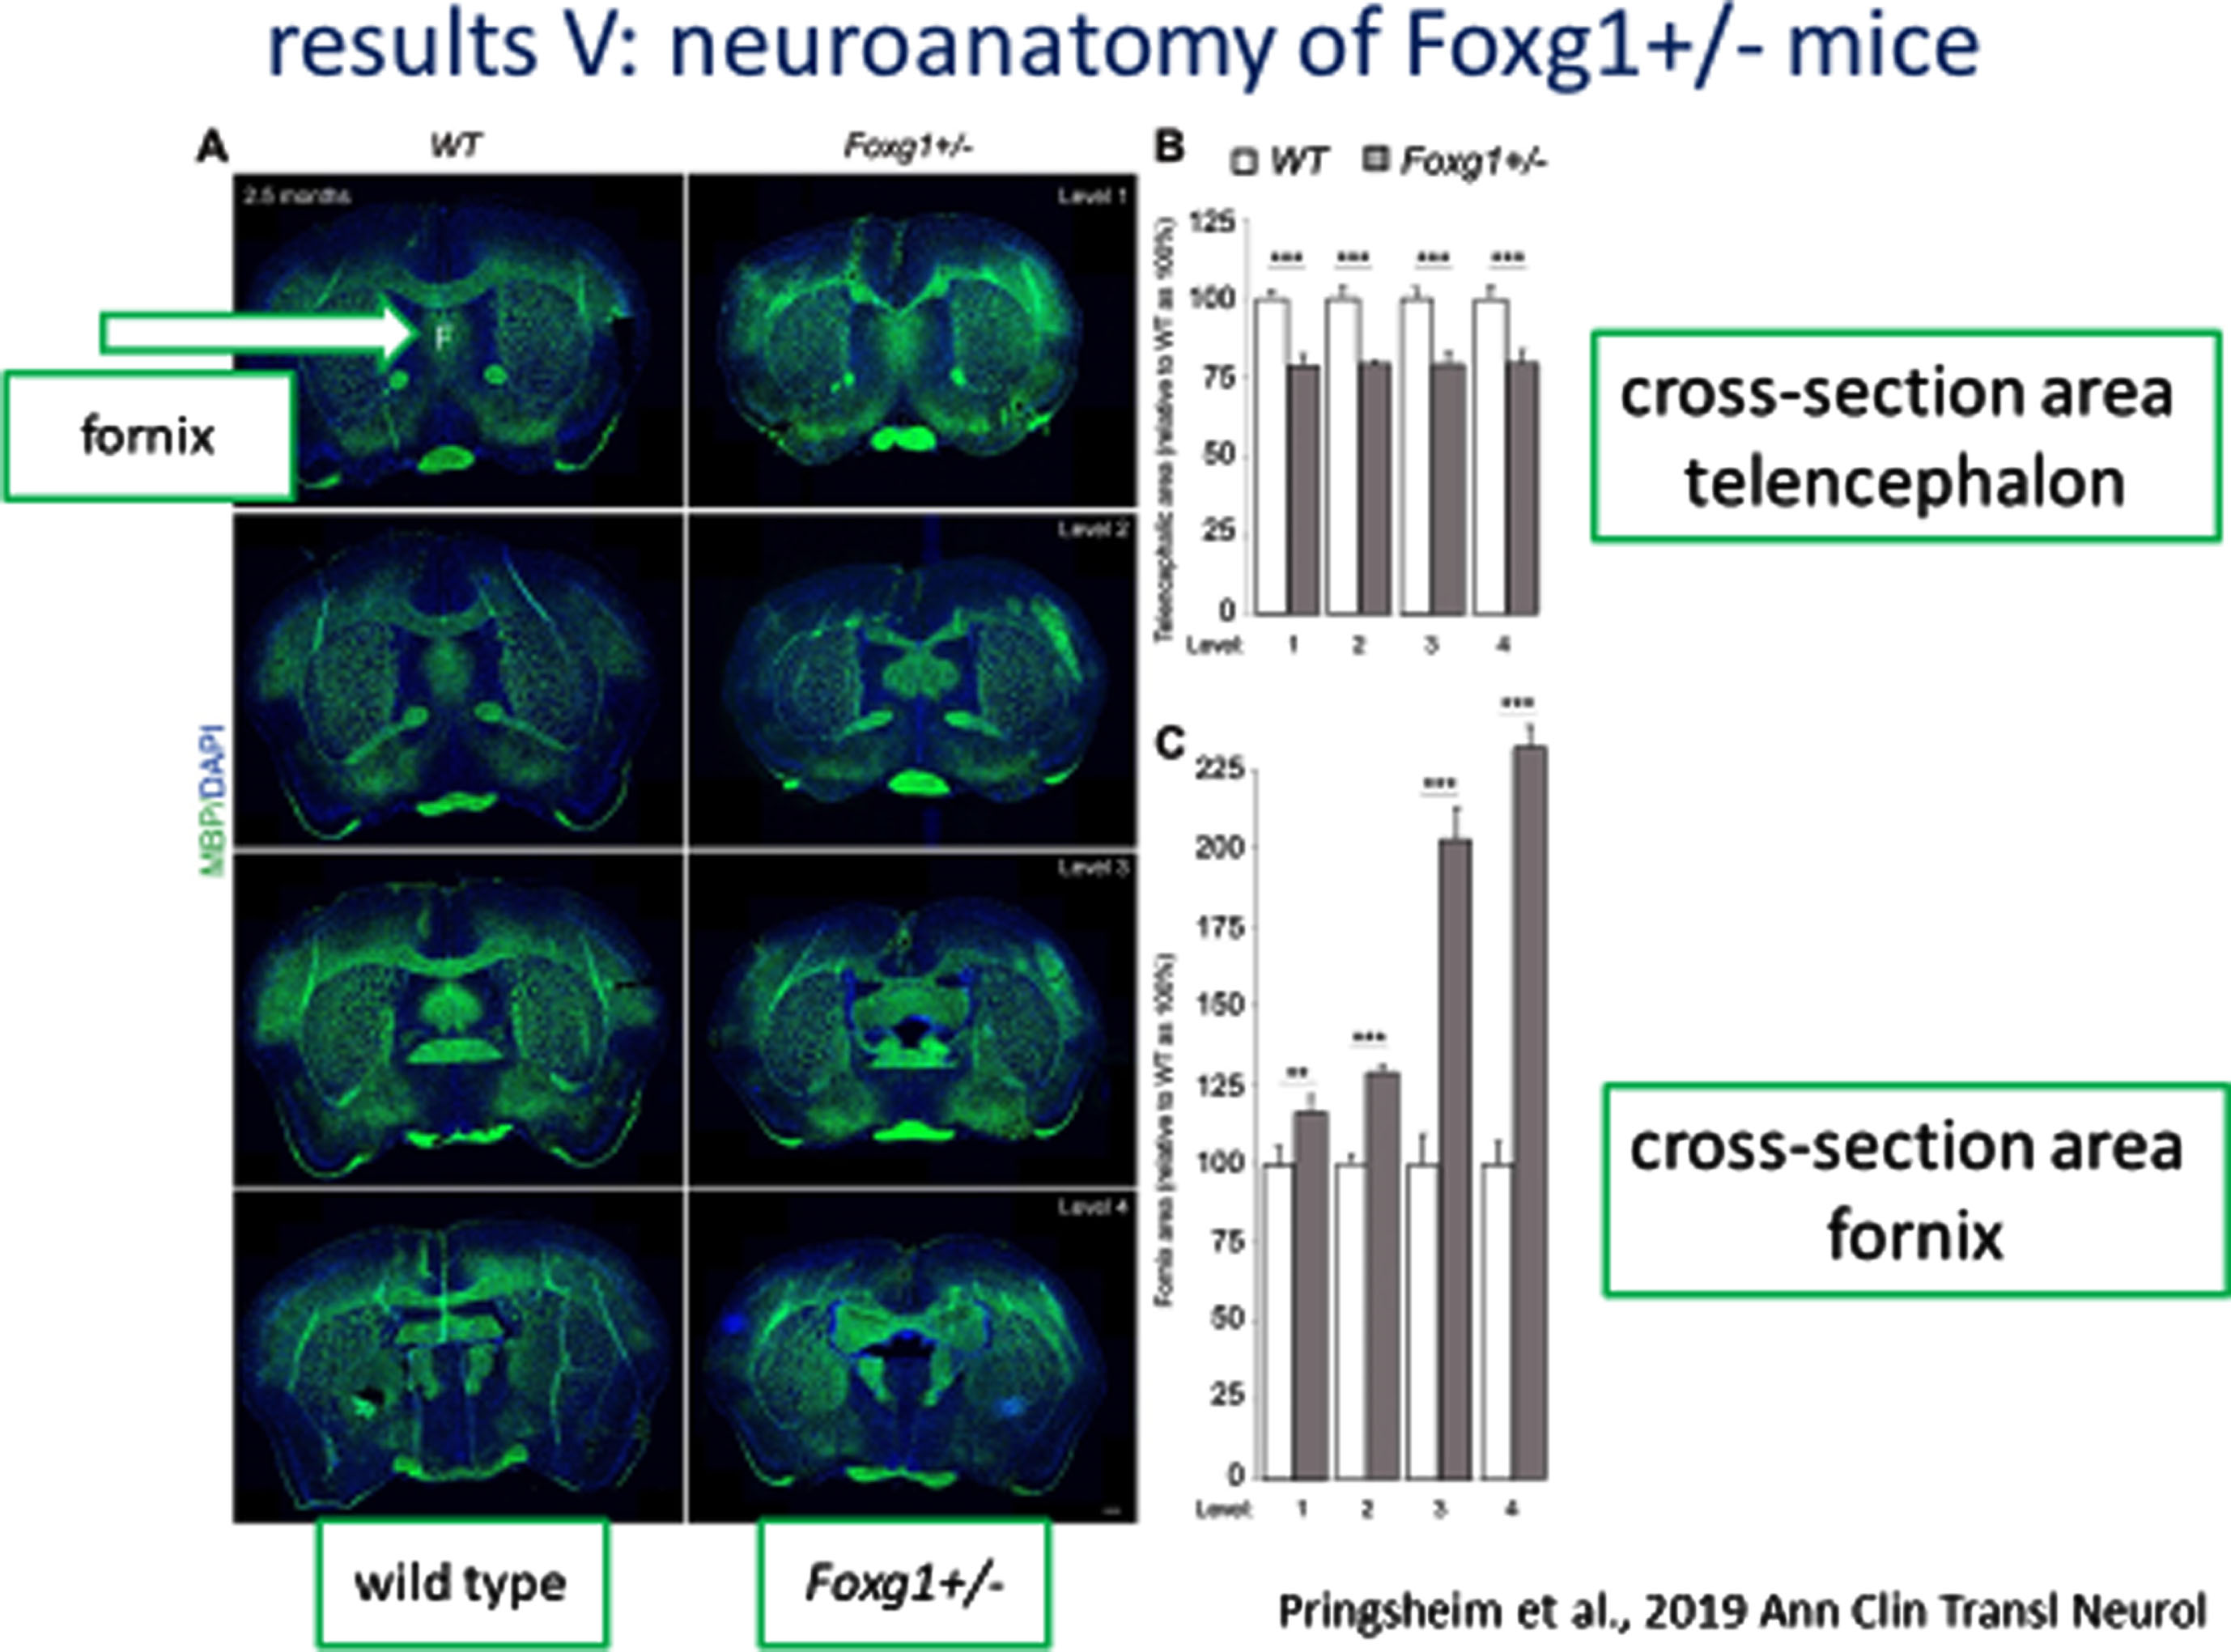 Neuroanatomy of FOXG1 Mouse Model: Cross-sectional area of Fornix.